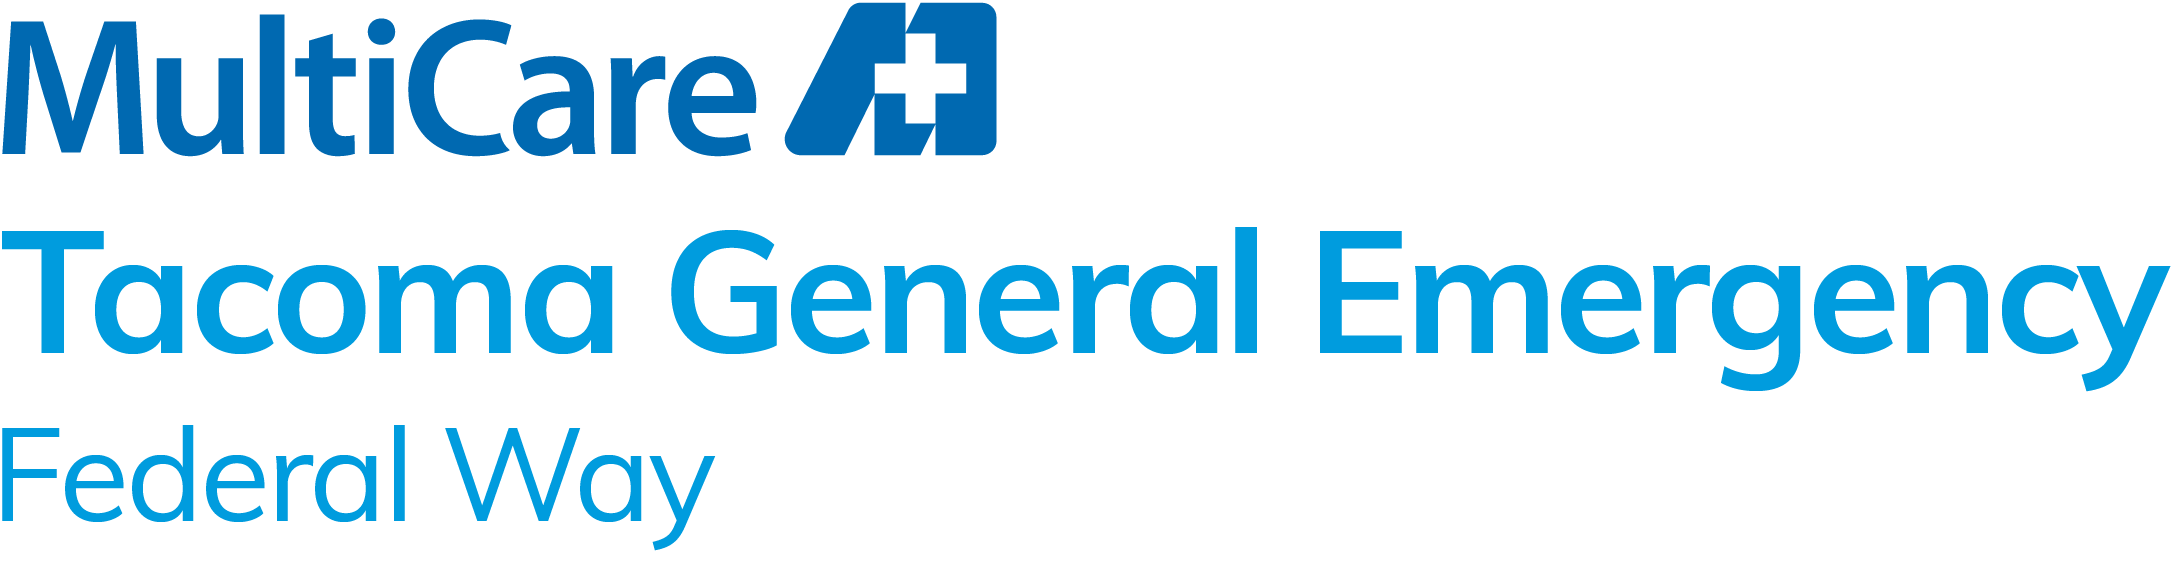 MultiCare Federal Way Emergency Logo